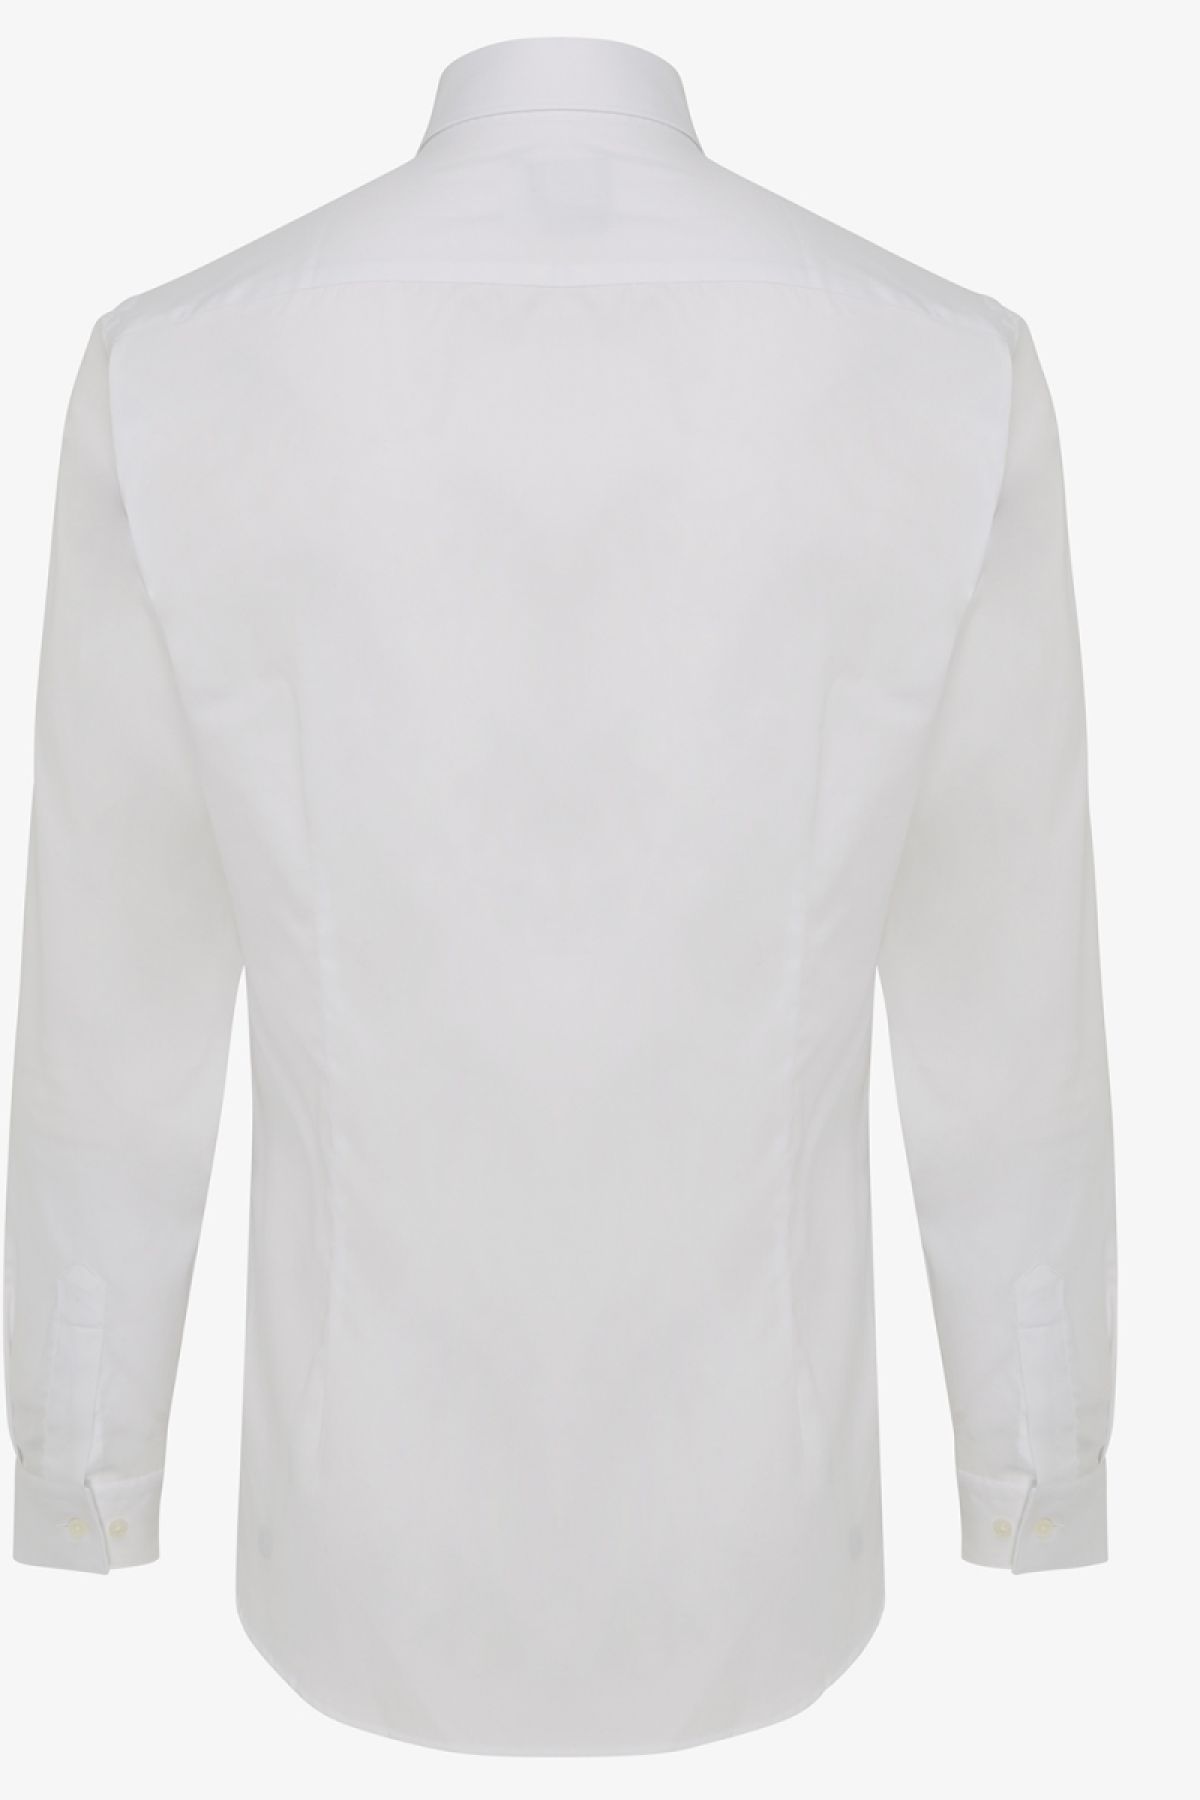 SKIN-FIT stretch overhemd wit